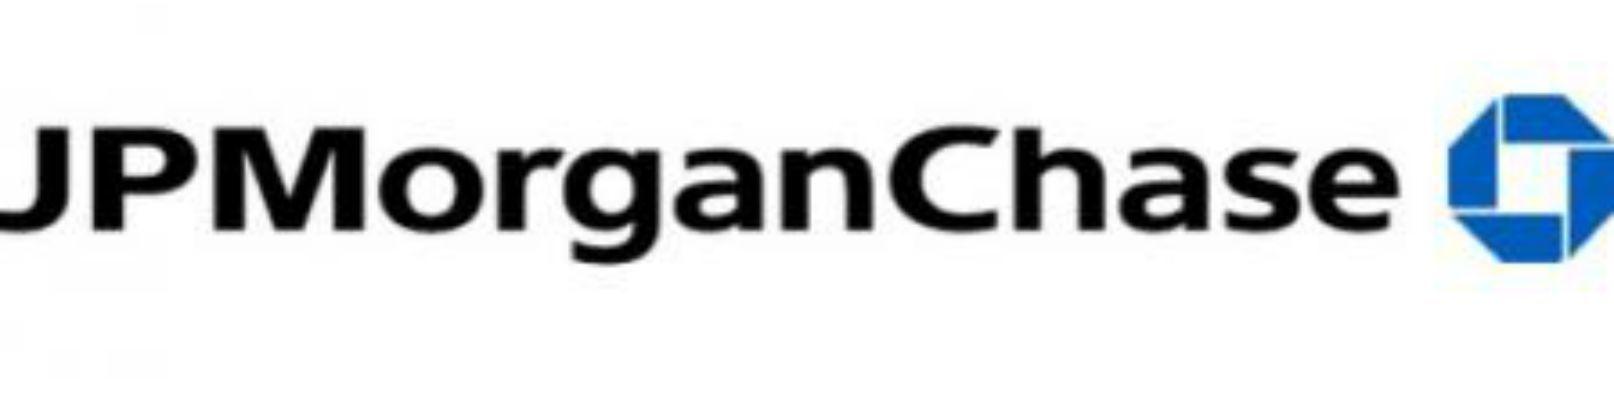 JPMorgan Chase Logo - JP-Morgan-Chase-logo - Delaware Business Times